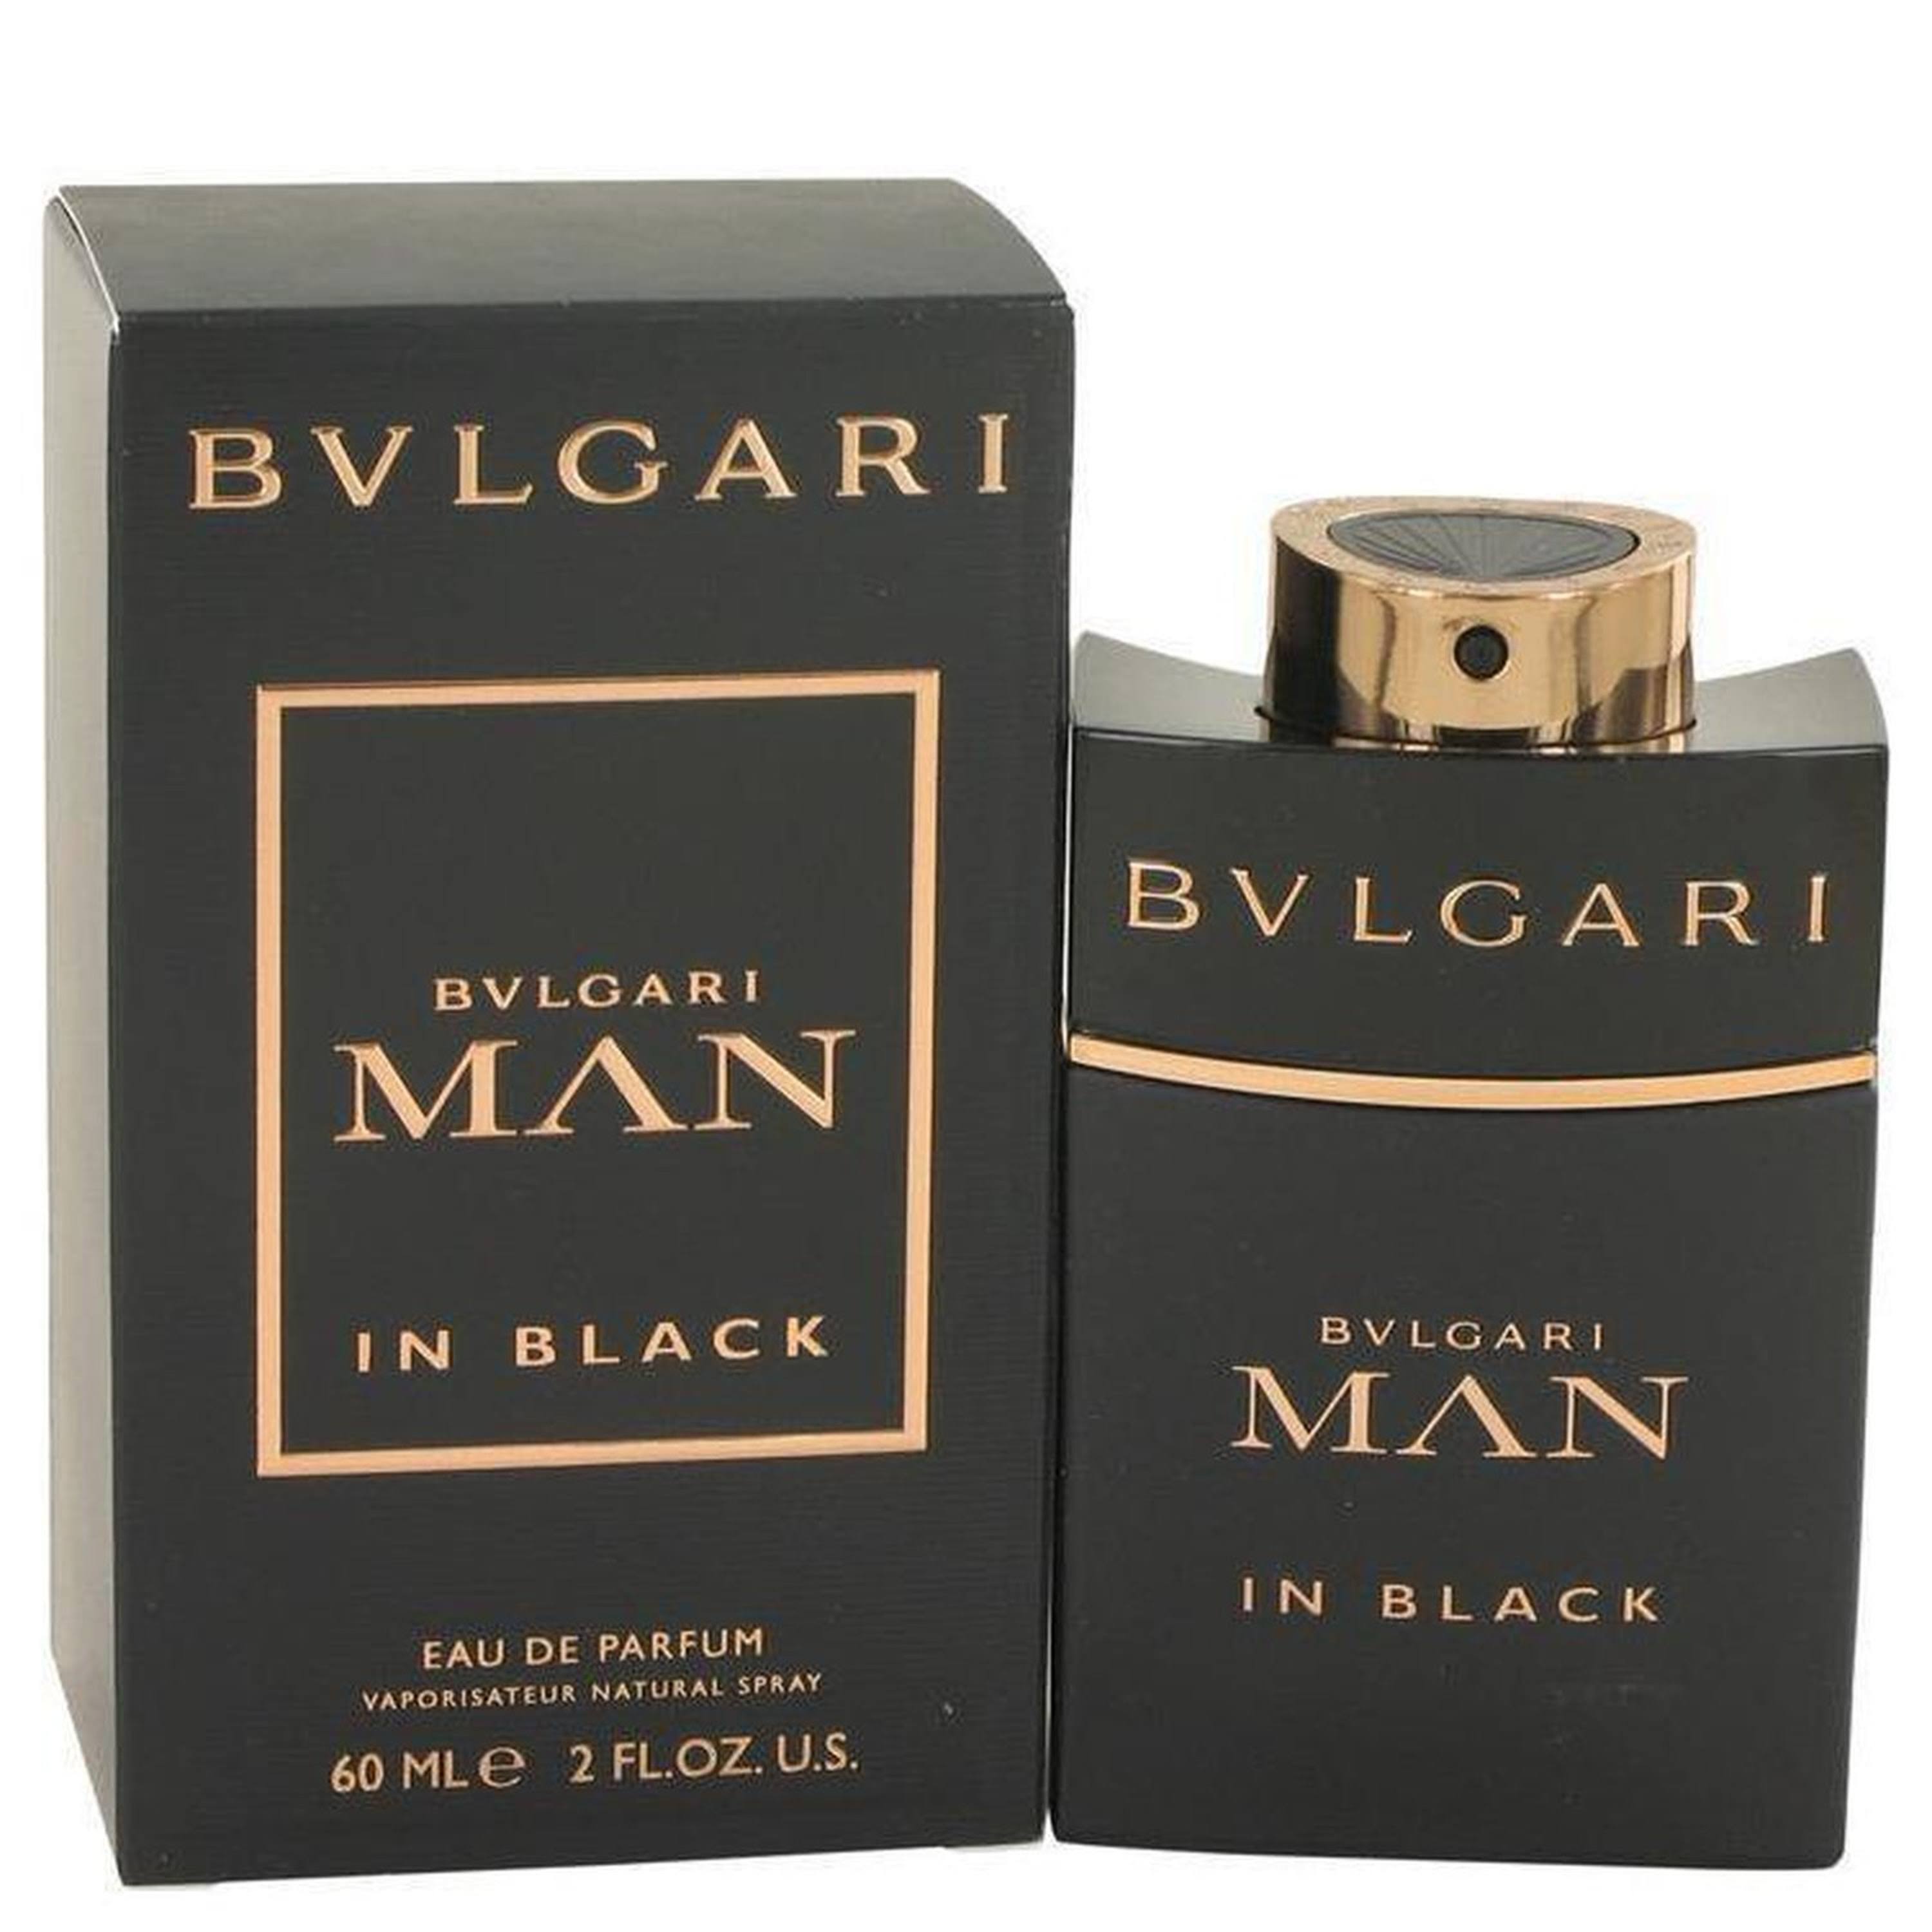 Bvlgari for Men Eau de Parfum Spray - 60ml, Man In Black